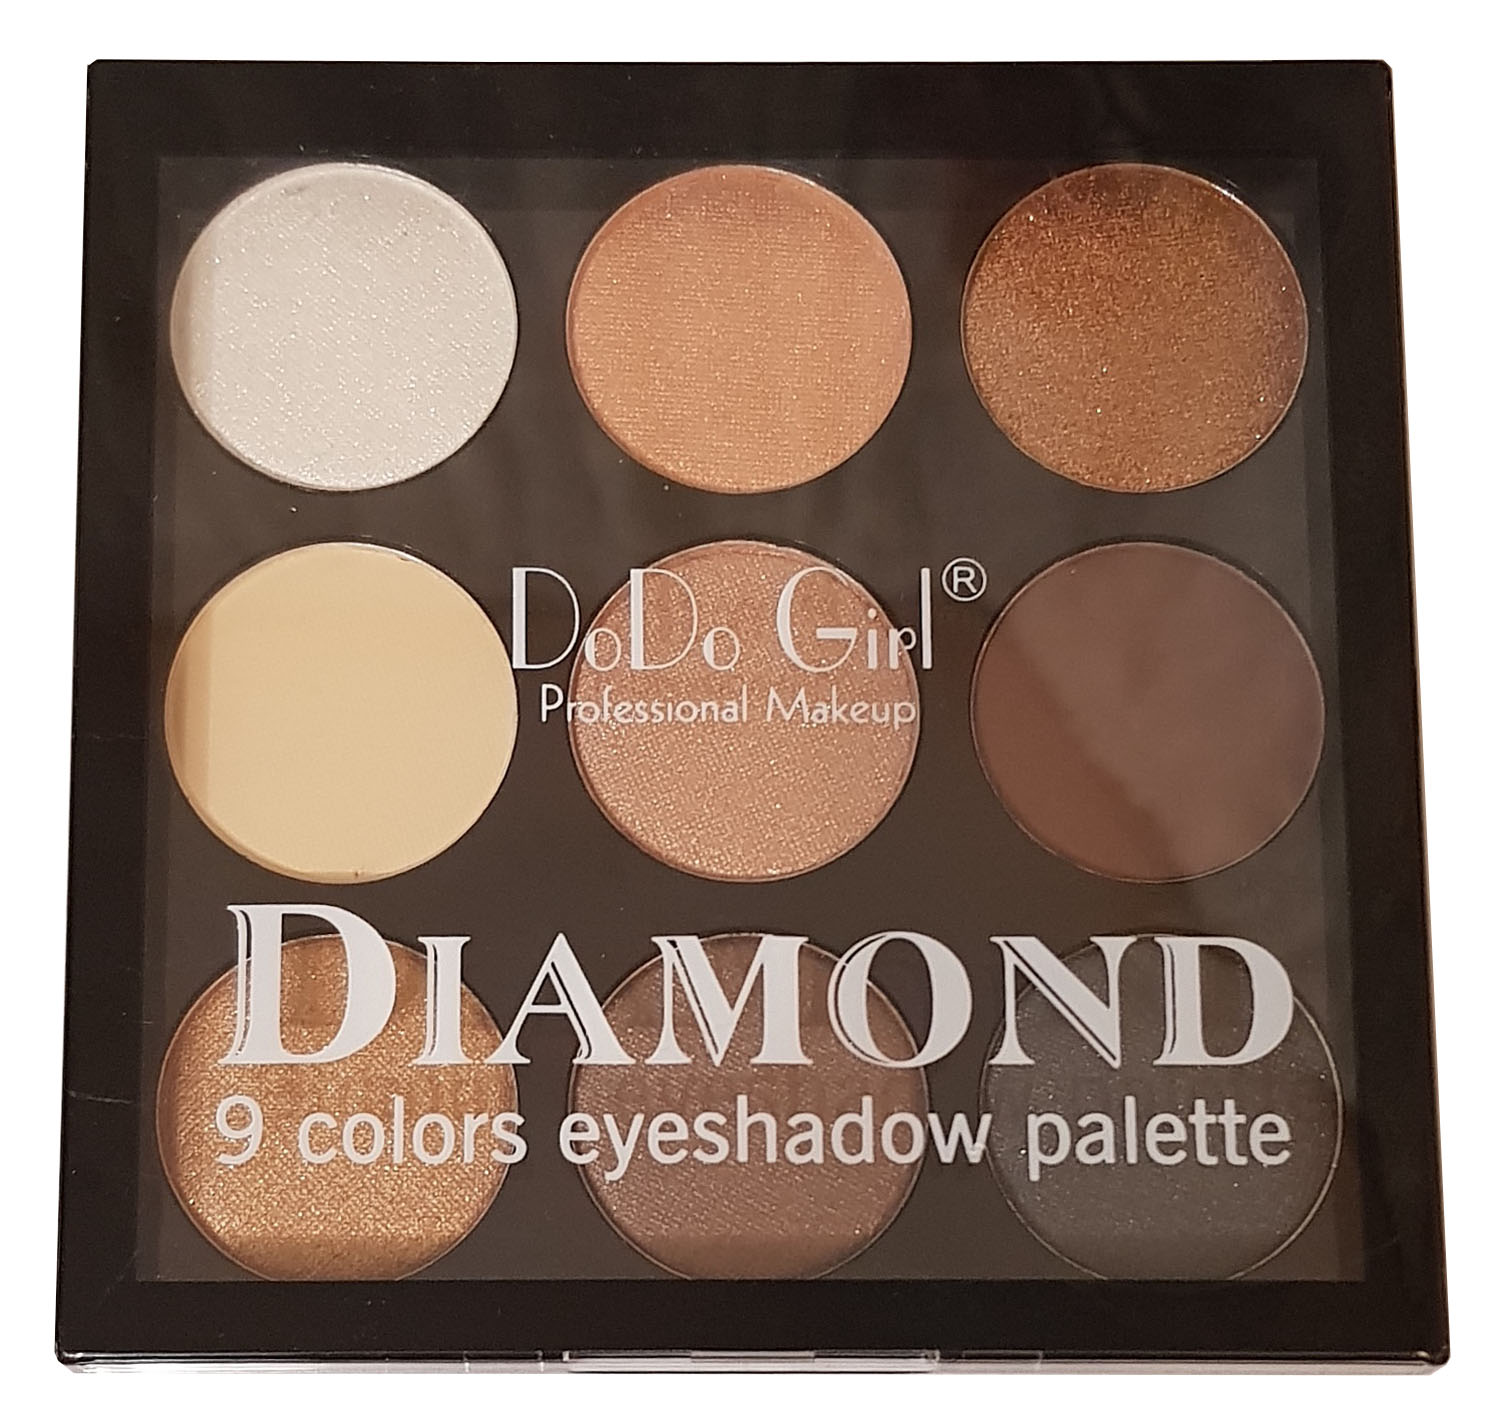 Палетка теней для глаз DoDo Girl Diamond Eyeshadow Palette, 9 оттенков, набор 03 лэтуаль палетка для макияжа глаз las vegas lights 16 оттенков